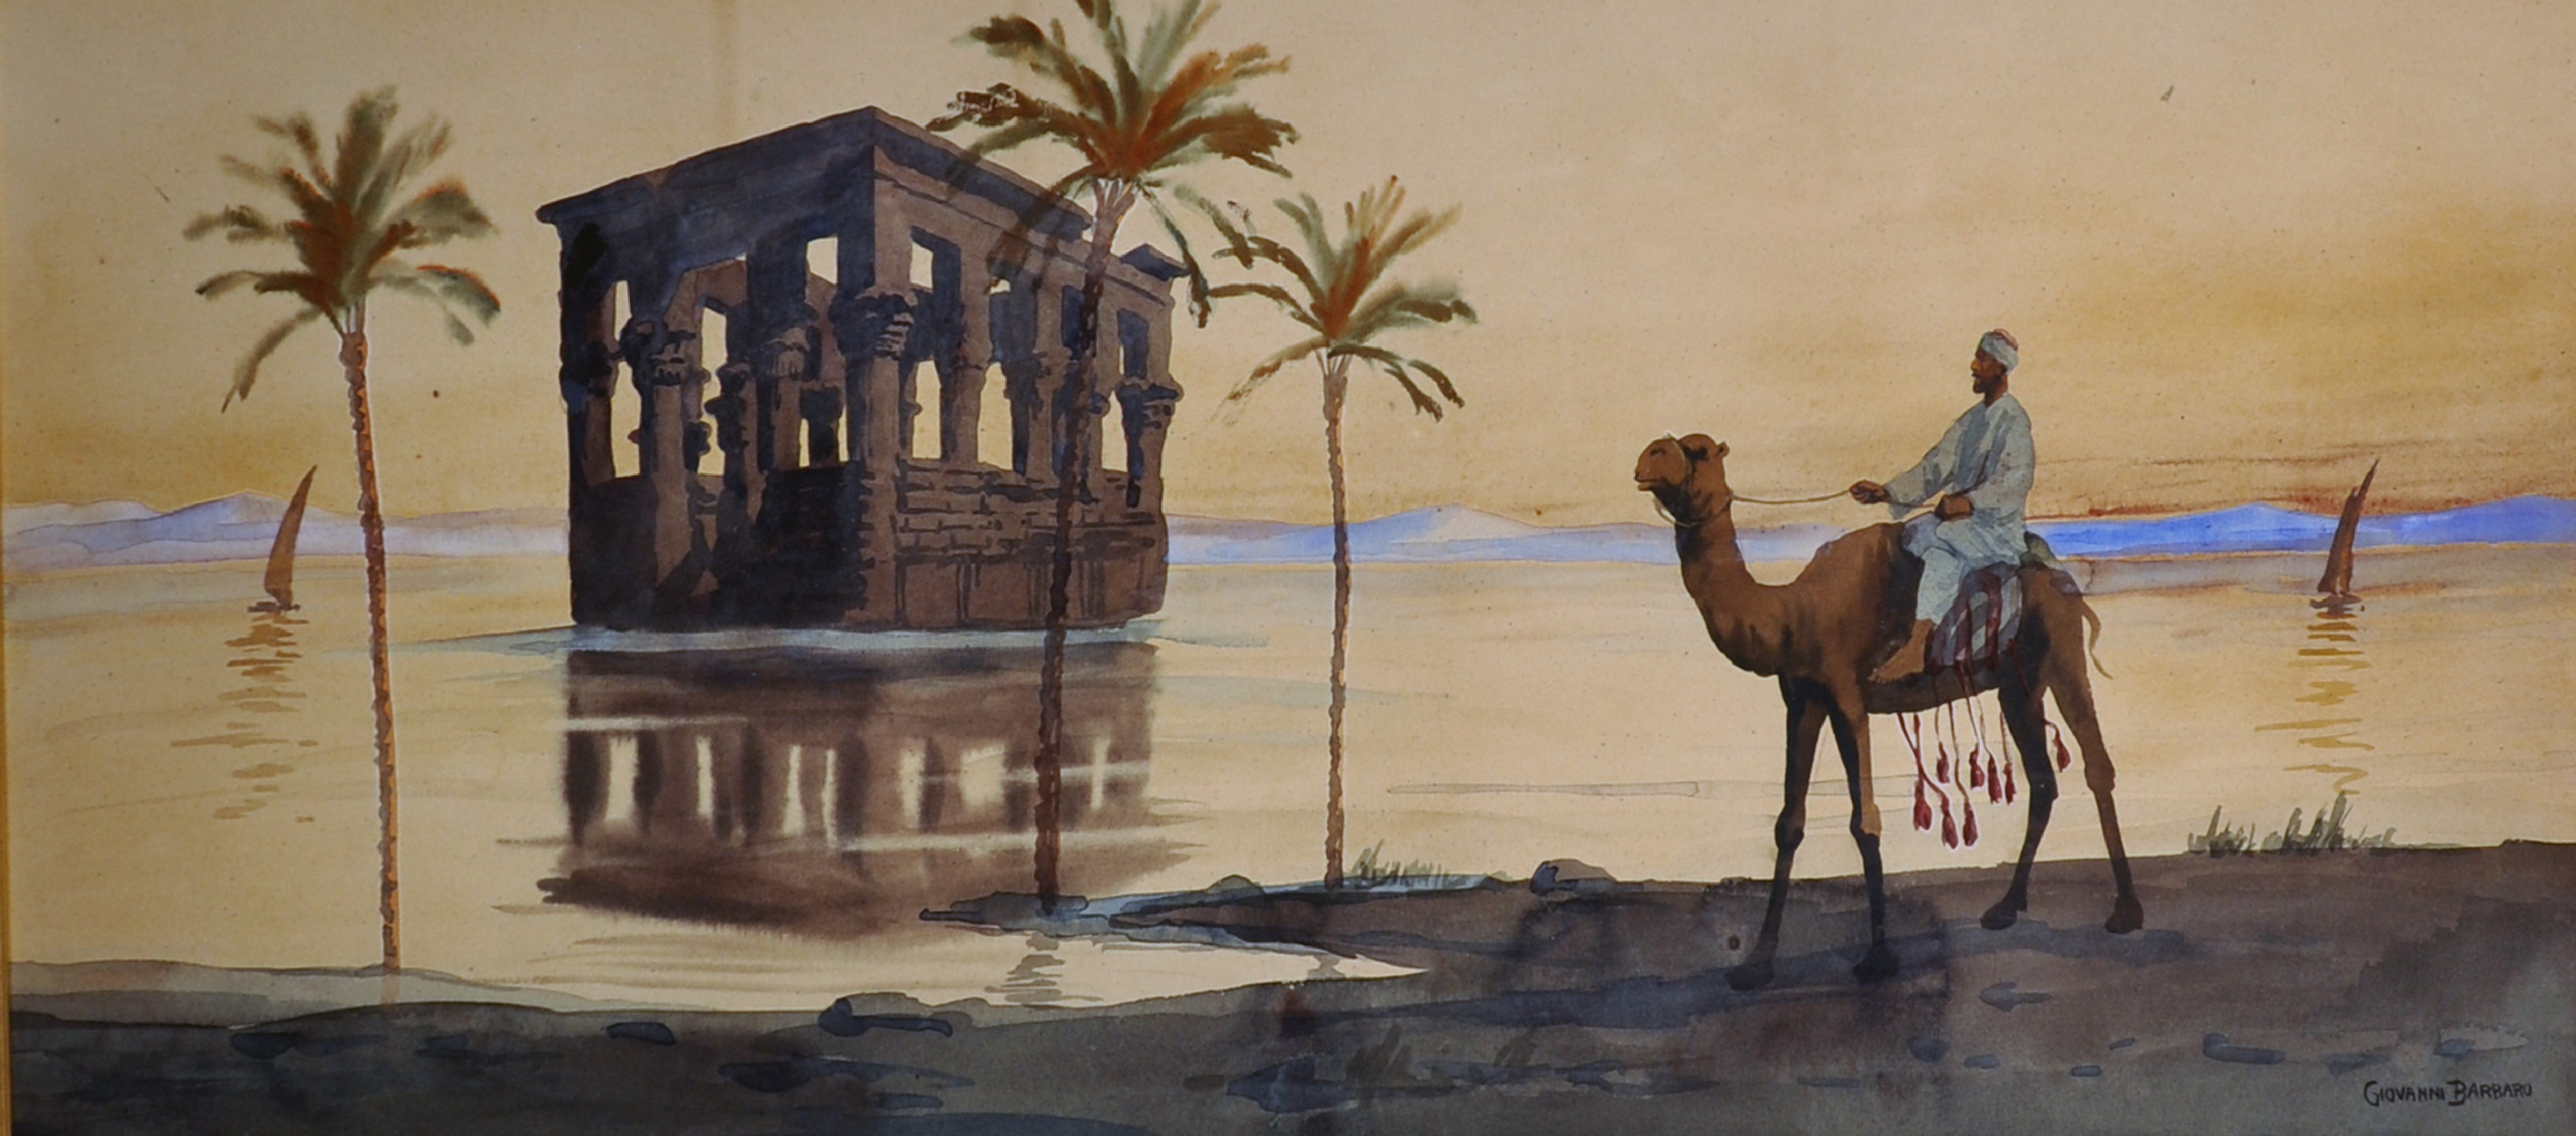 Giovanni Barbaro (1864-1915) Italian. "Pharoah's [sic] Bed, Philae, Nile", with a Figure Riding a